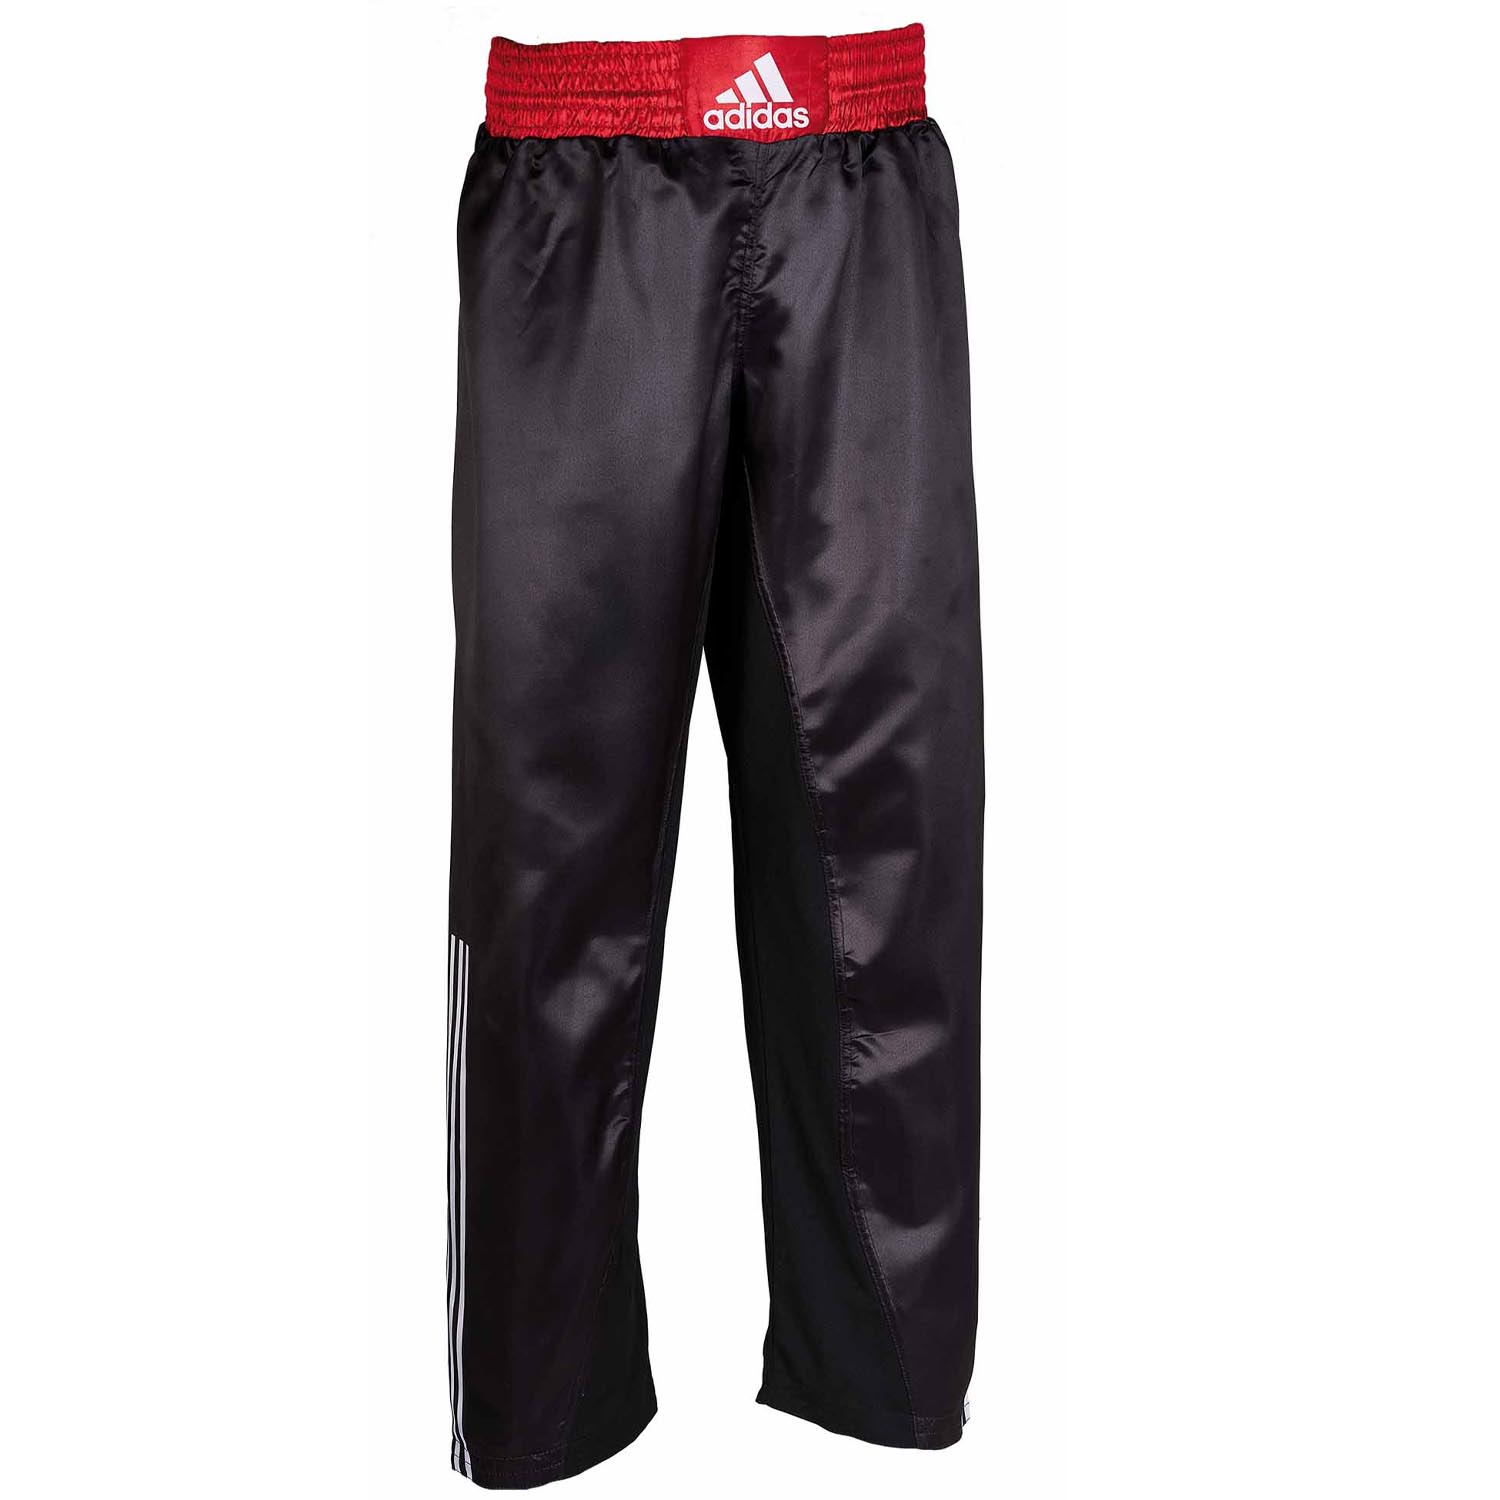 adidas Kickboxhosen, schwarz-rot, XL